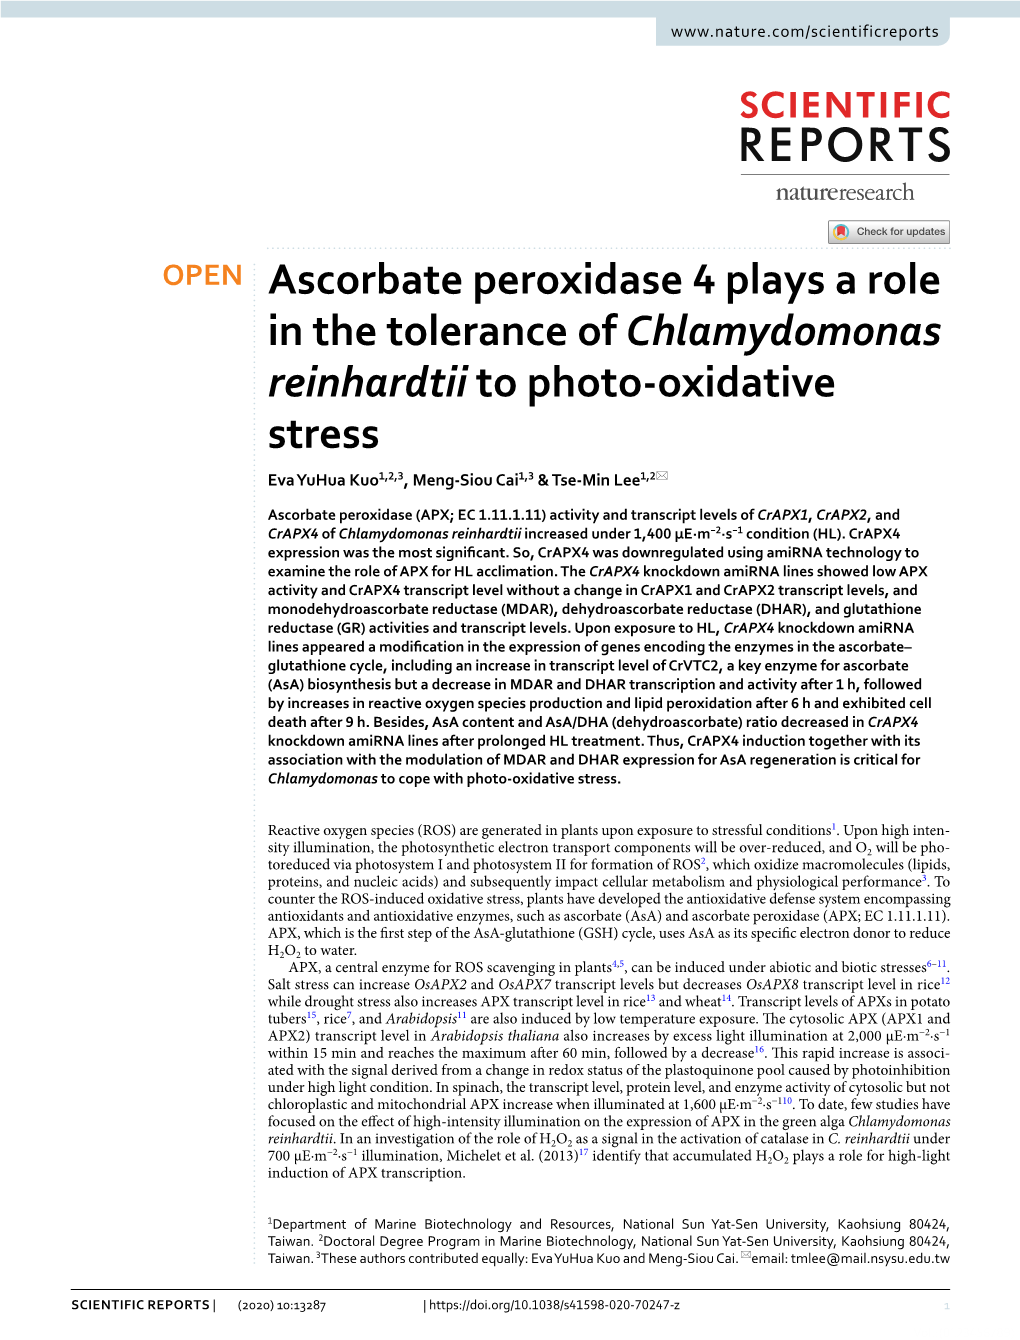 Ascorbate Peroxidase 4 Plays a Role in the Tolerance of Chlamydomonas Reinhardtii to Photo-Oxidative Stress